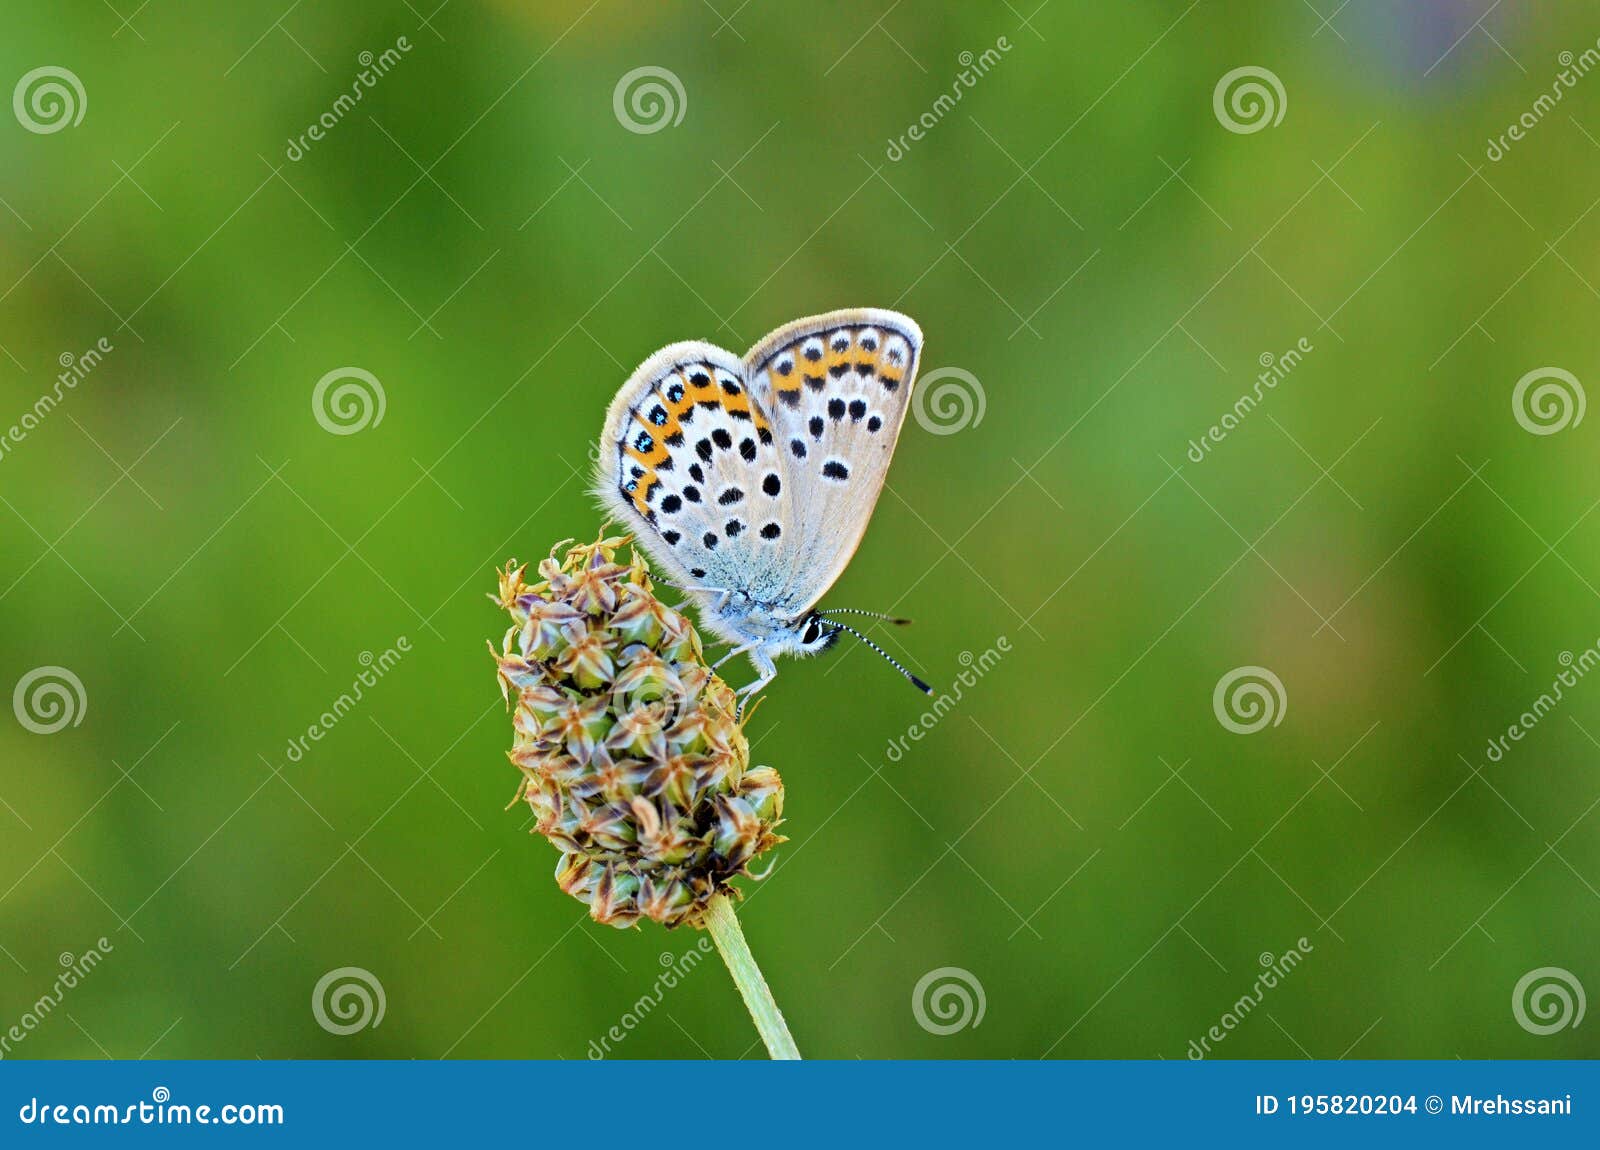 plebejus idas , the idas blue or northern blue butterfly